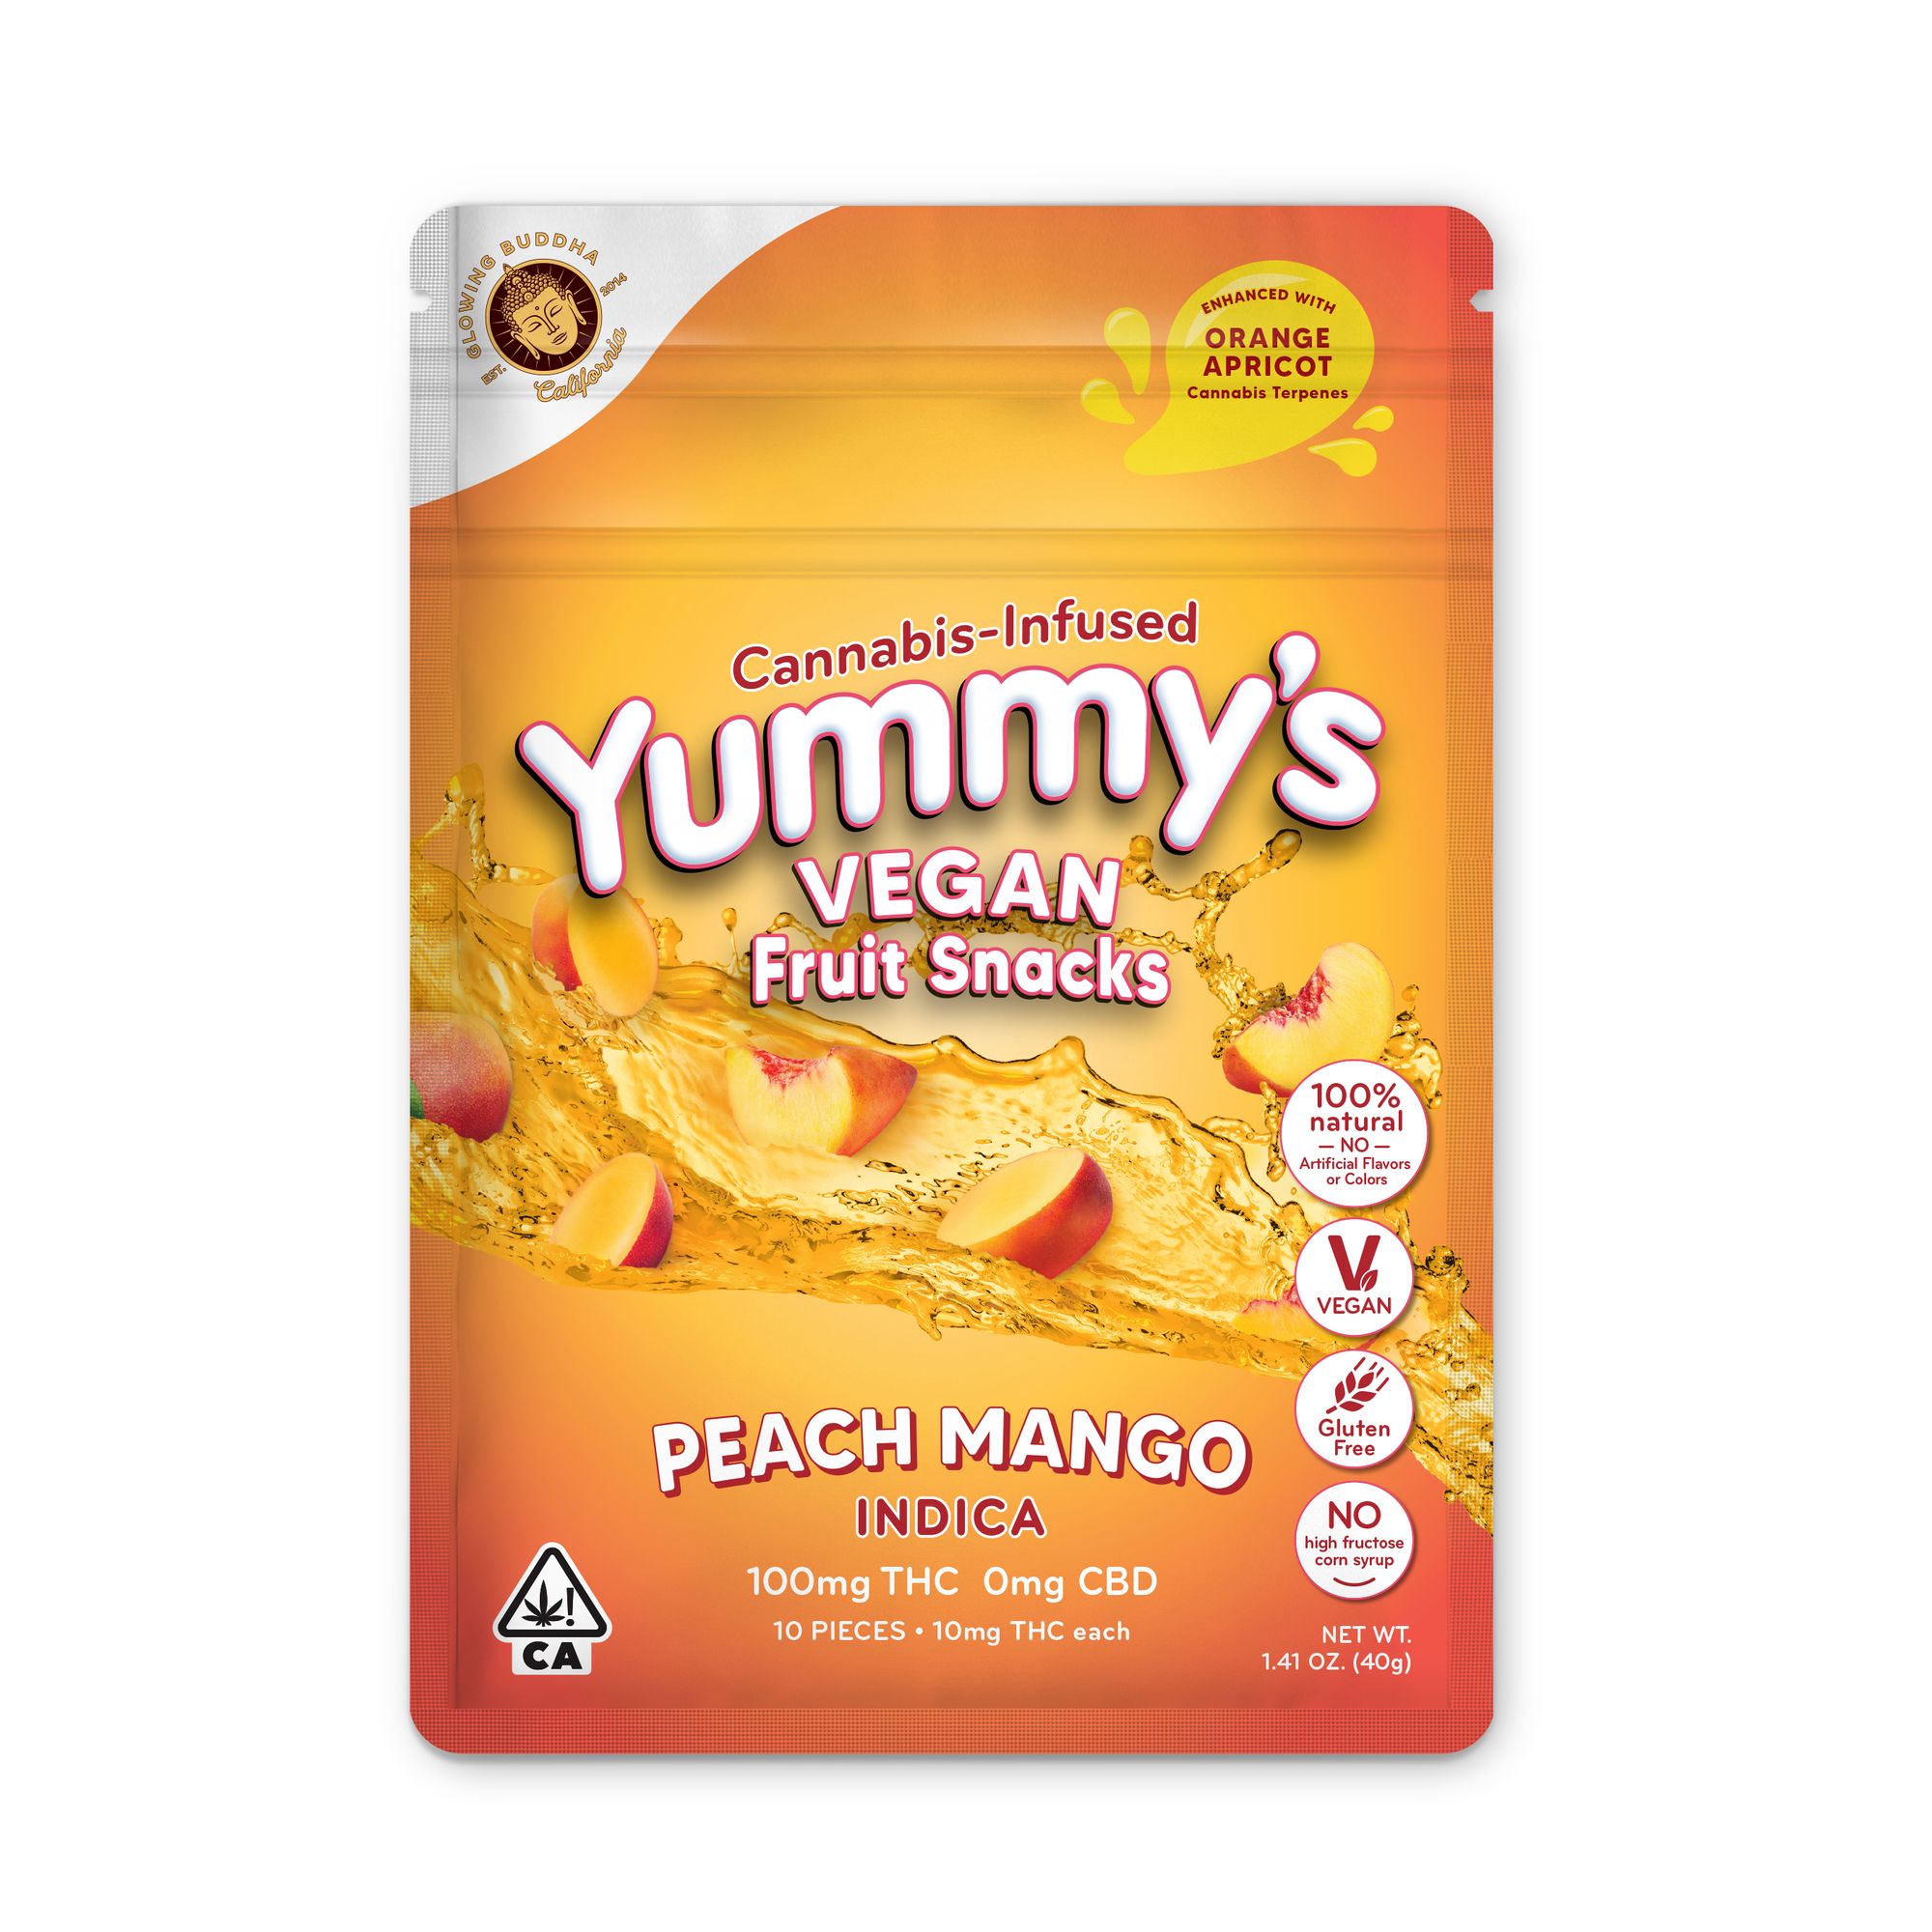 Peach Mango Live Resin Vegan Gummies